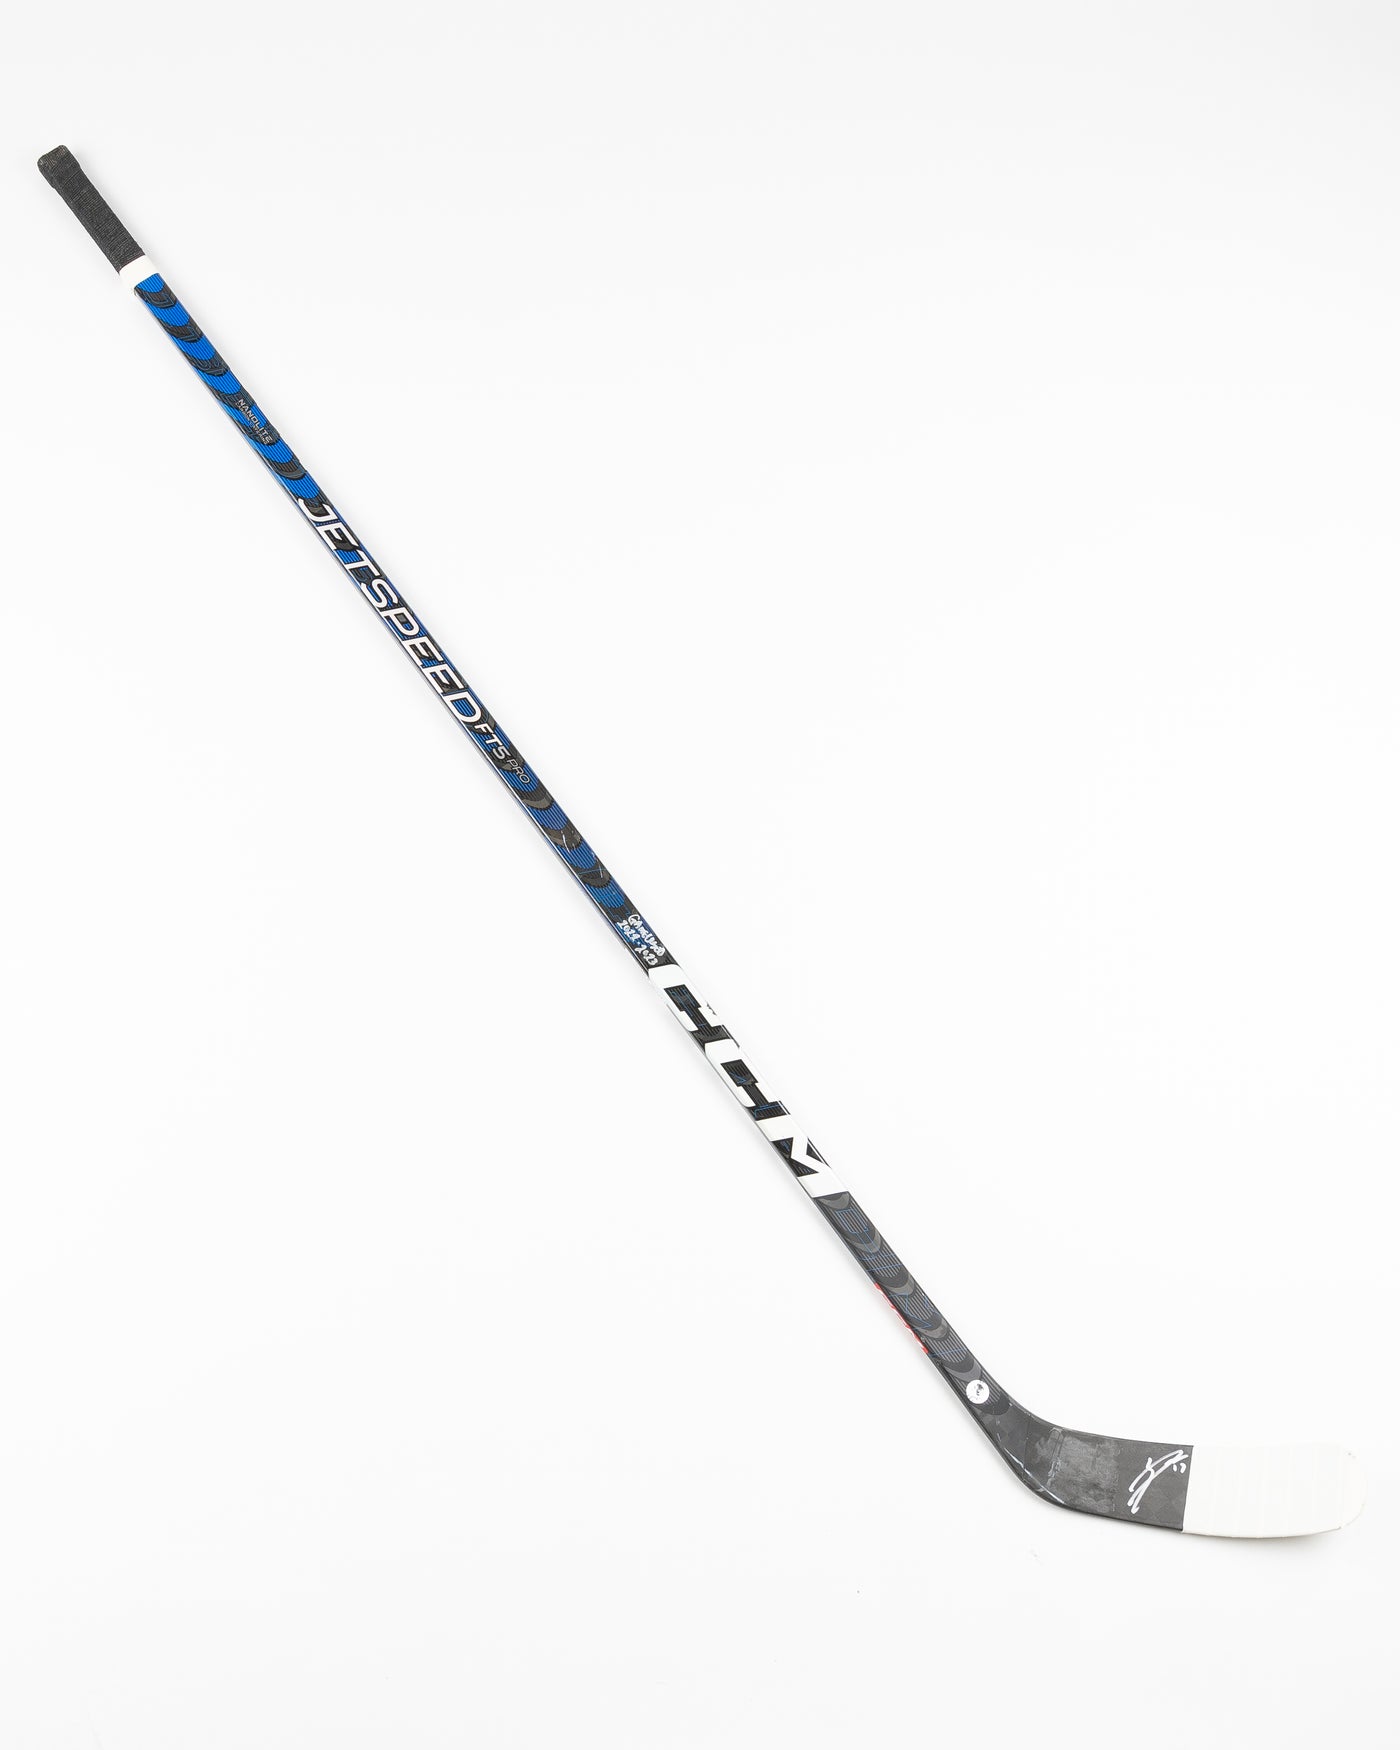 signed and game used Chicago Blackhawks Jason Dickinson hockey stick - front lay flat